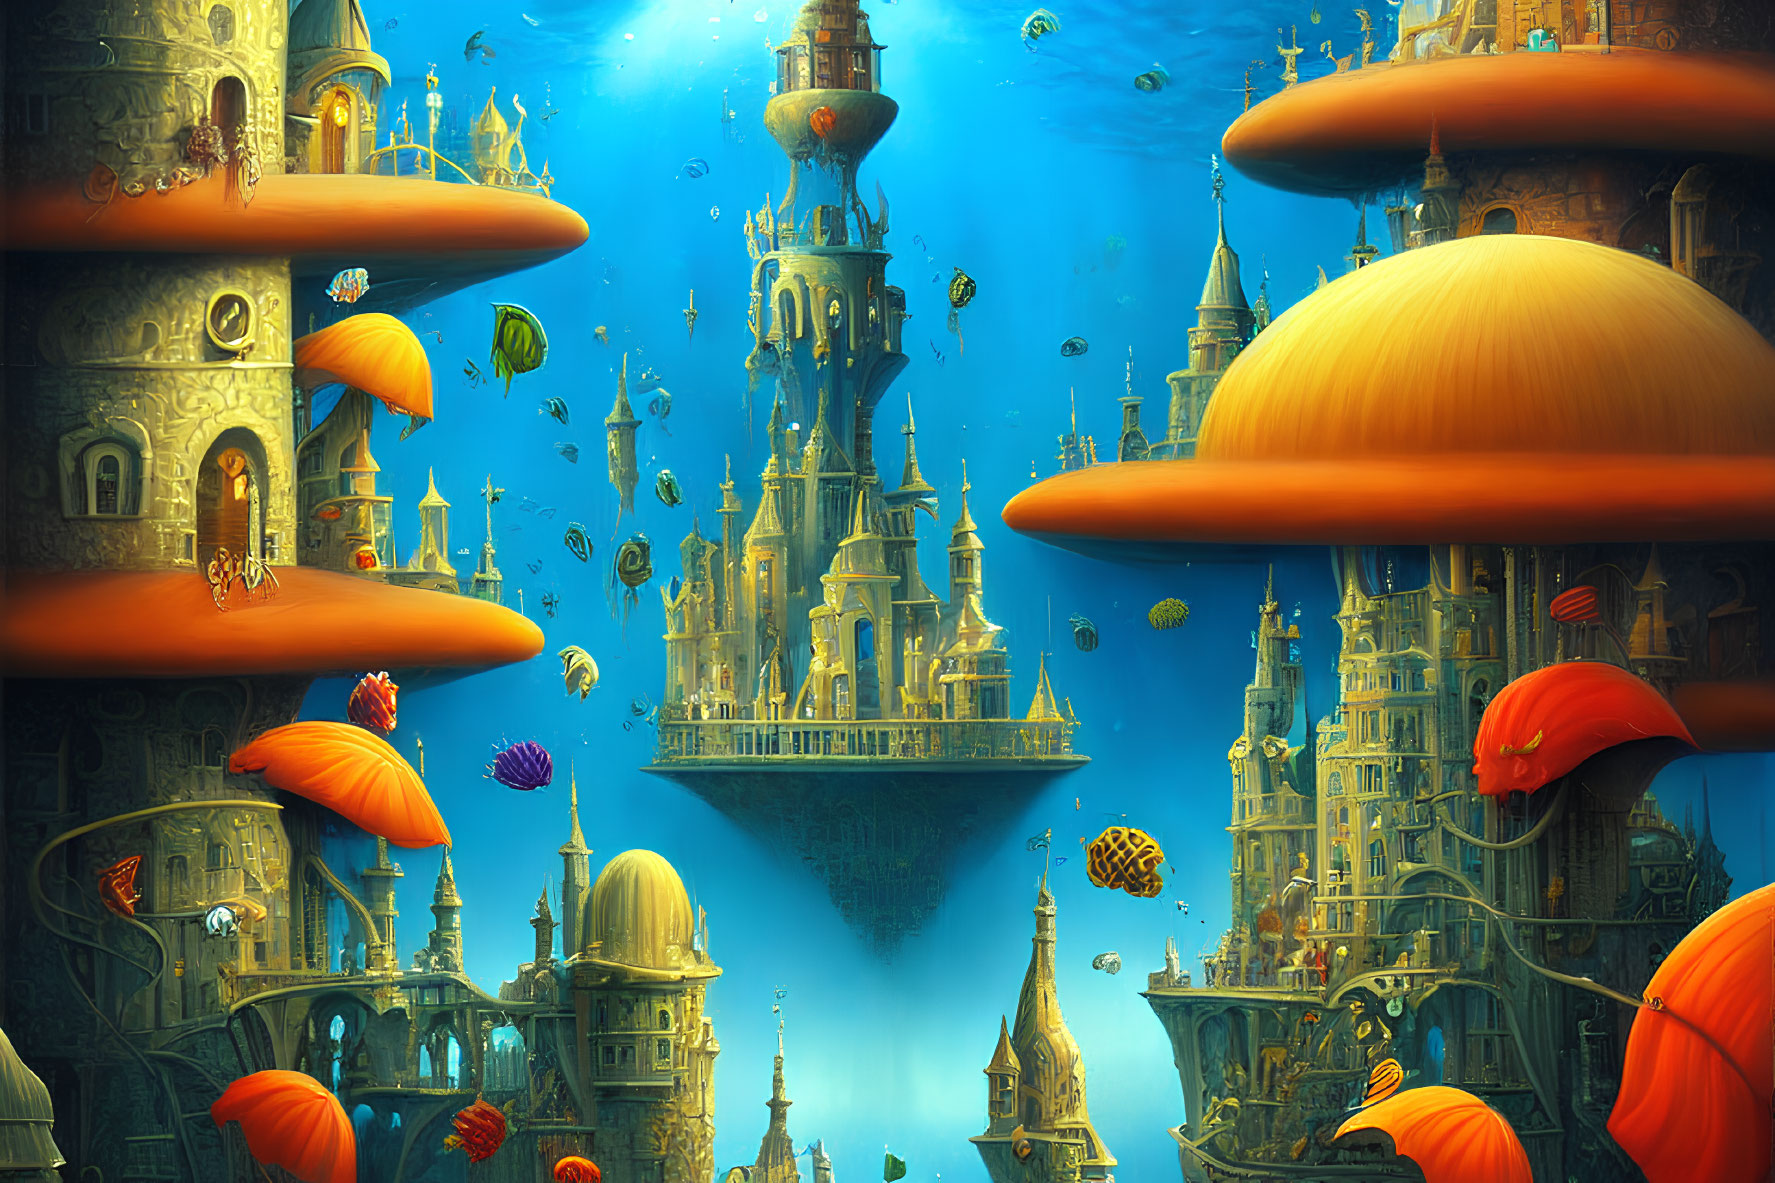 Colorful fish swim in whimsical underwater fantasy scene